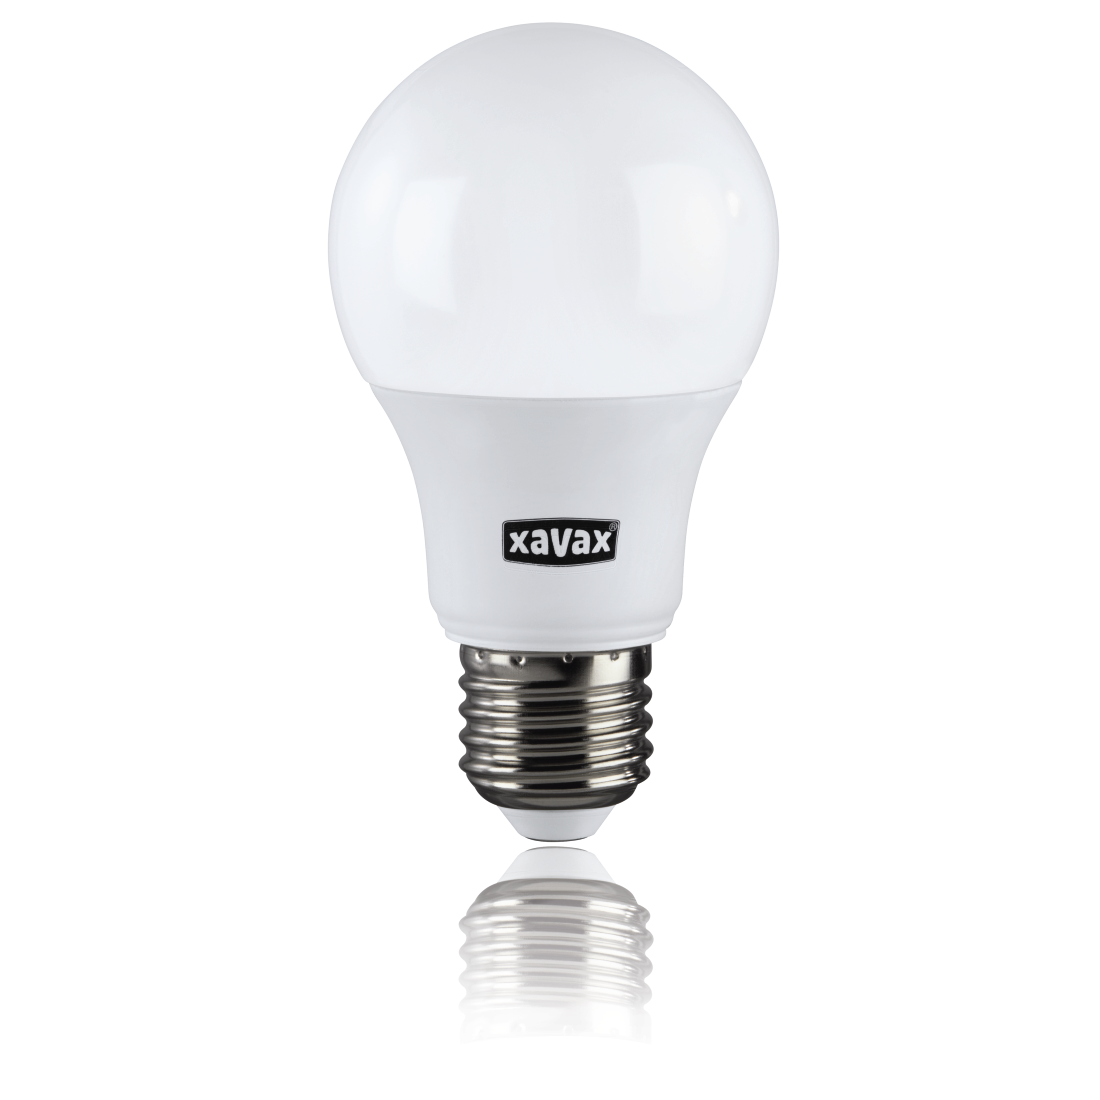 abx2 Druckfähige Abbildung 2 - Xavax, LED-Lampe, E27, 806 lm ersetzt 60W, Glühlampe, Warmweiß, 3-Stufen-dimmbar